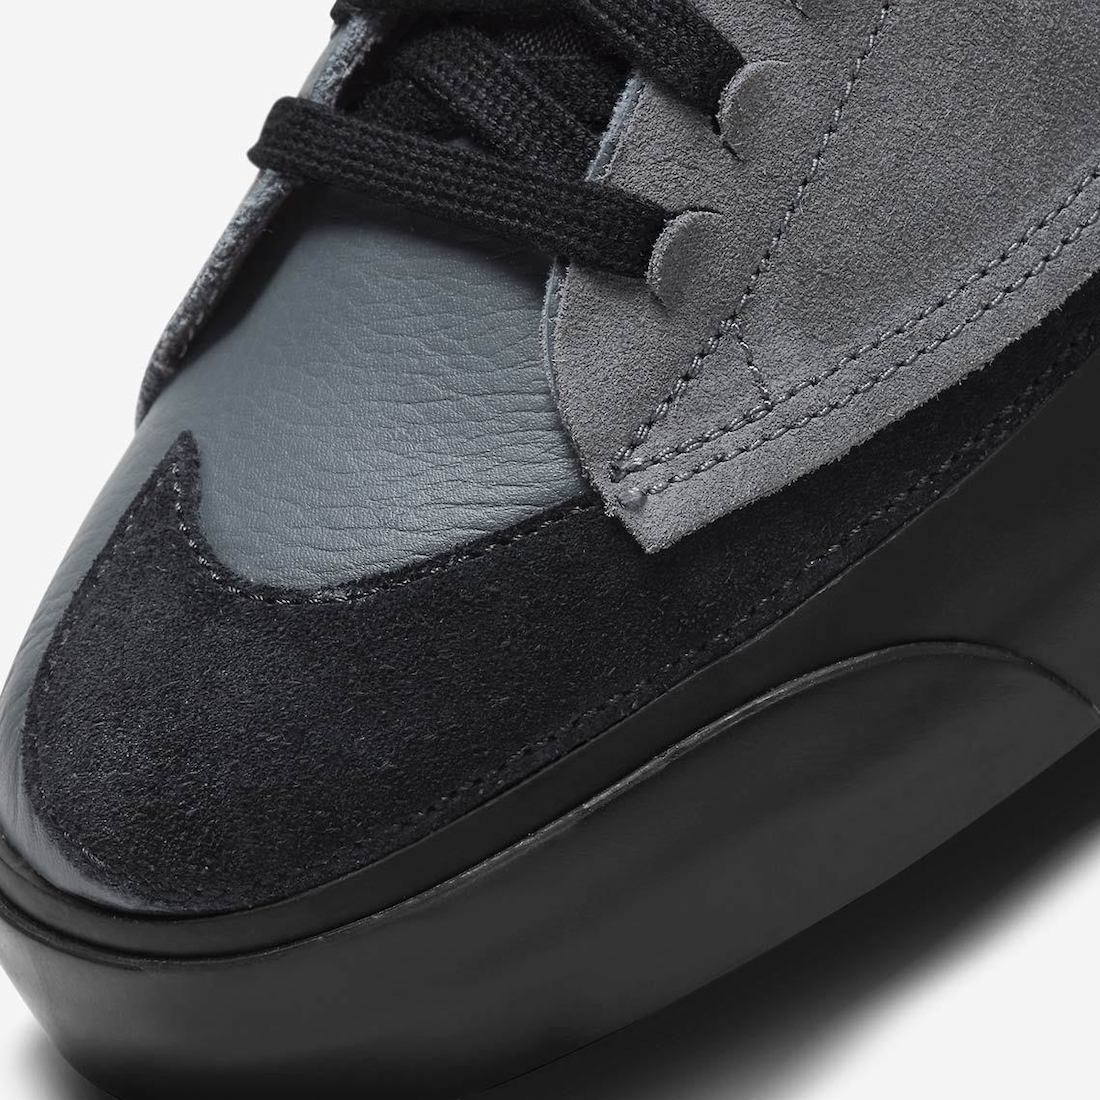 Nike SB Blazer Mid Edge Black Grey DA2189-001 Release Date Info